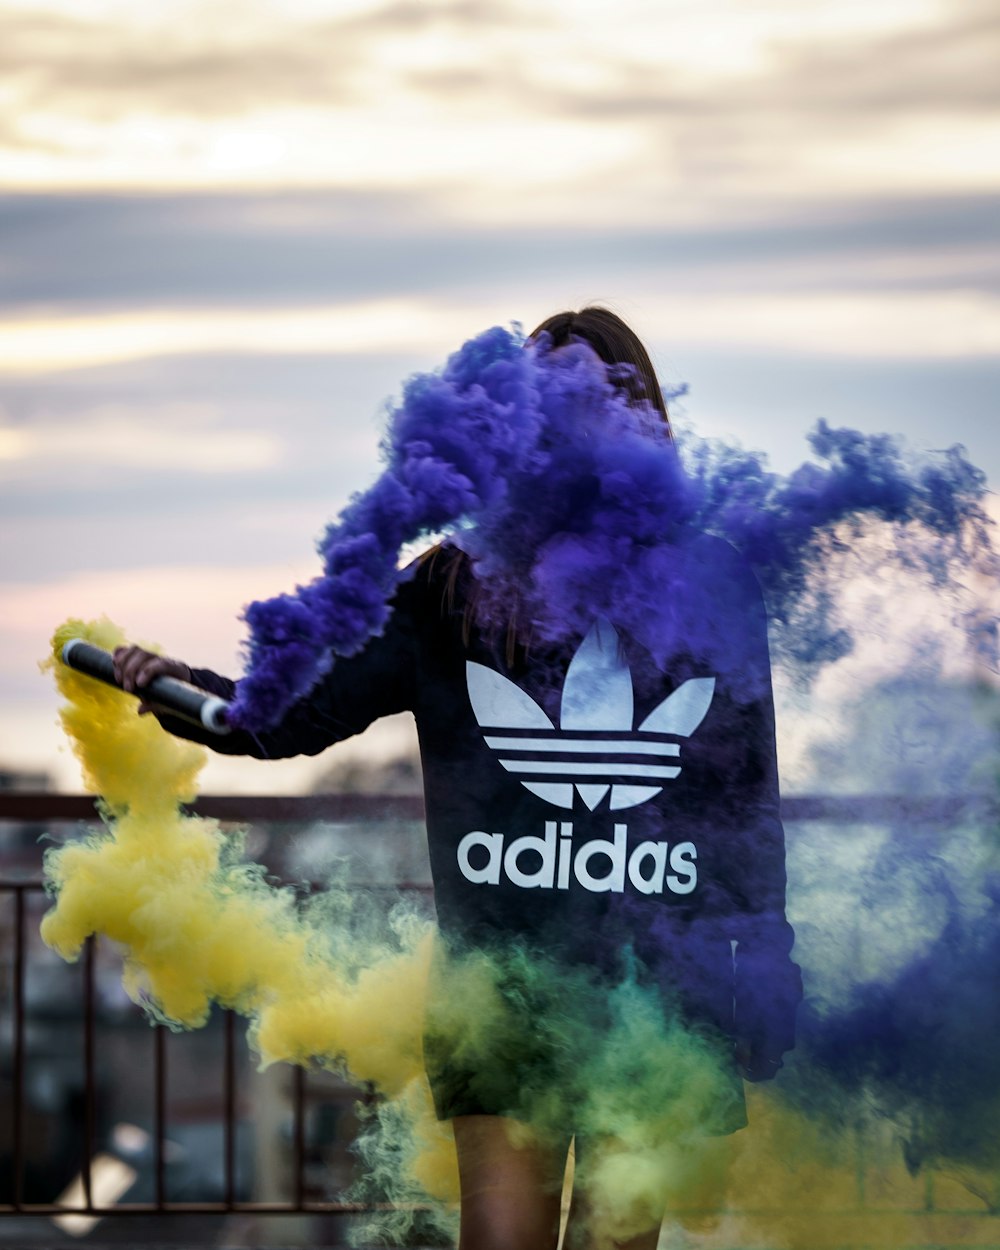 Vervuild verschijnen deugd Adidas Wallpapers: Free HD Download [500+ HQ] | Unsplash